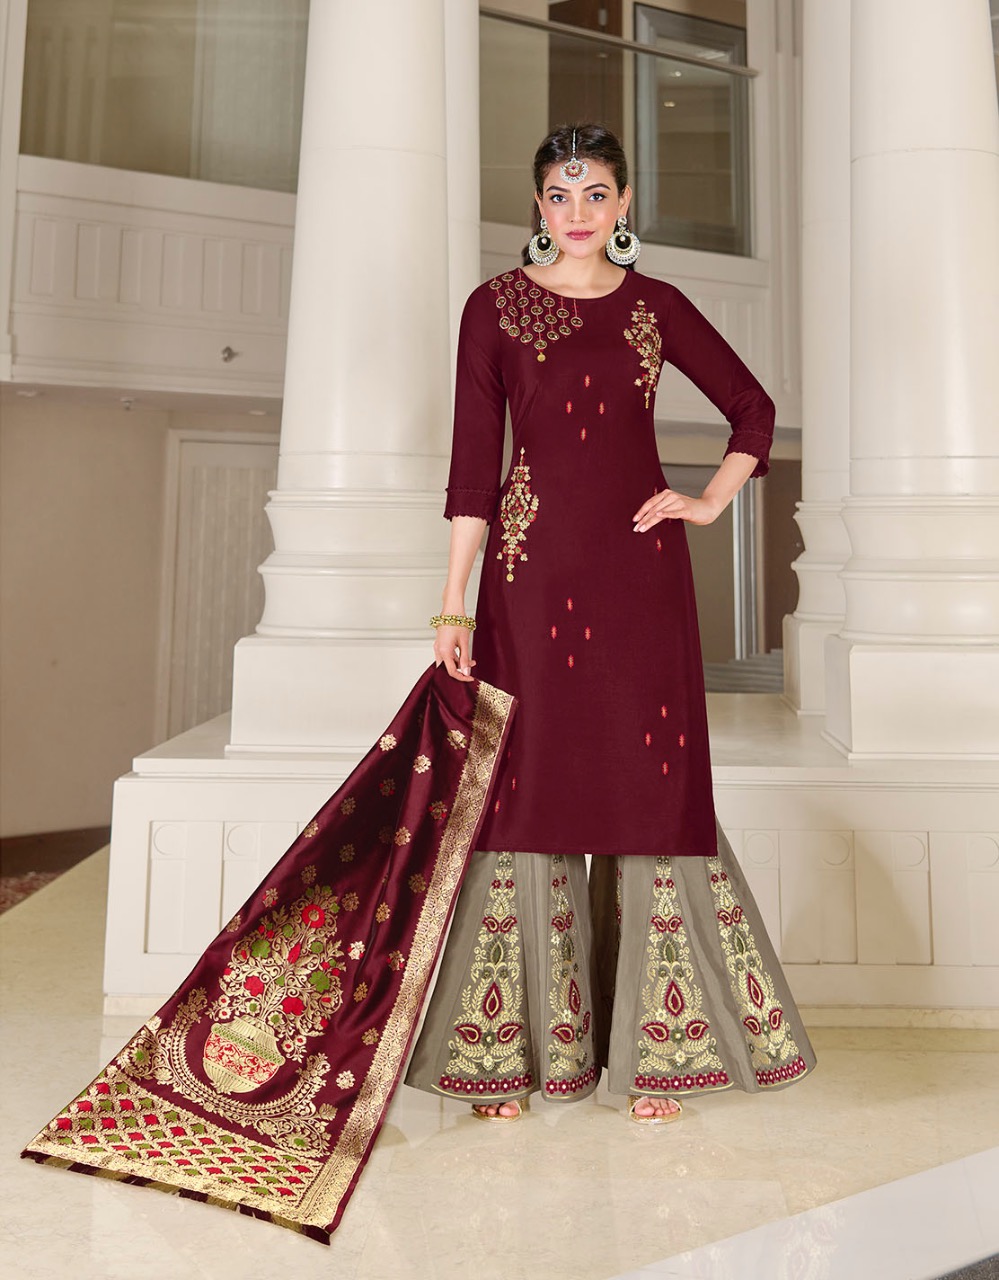 lilly and lali shringar silk astonish style kurti bottom with dupatta catalog